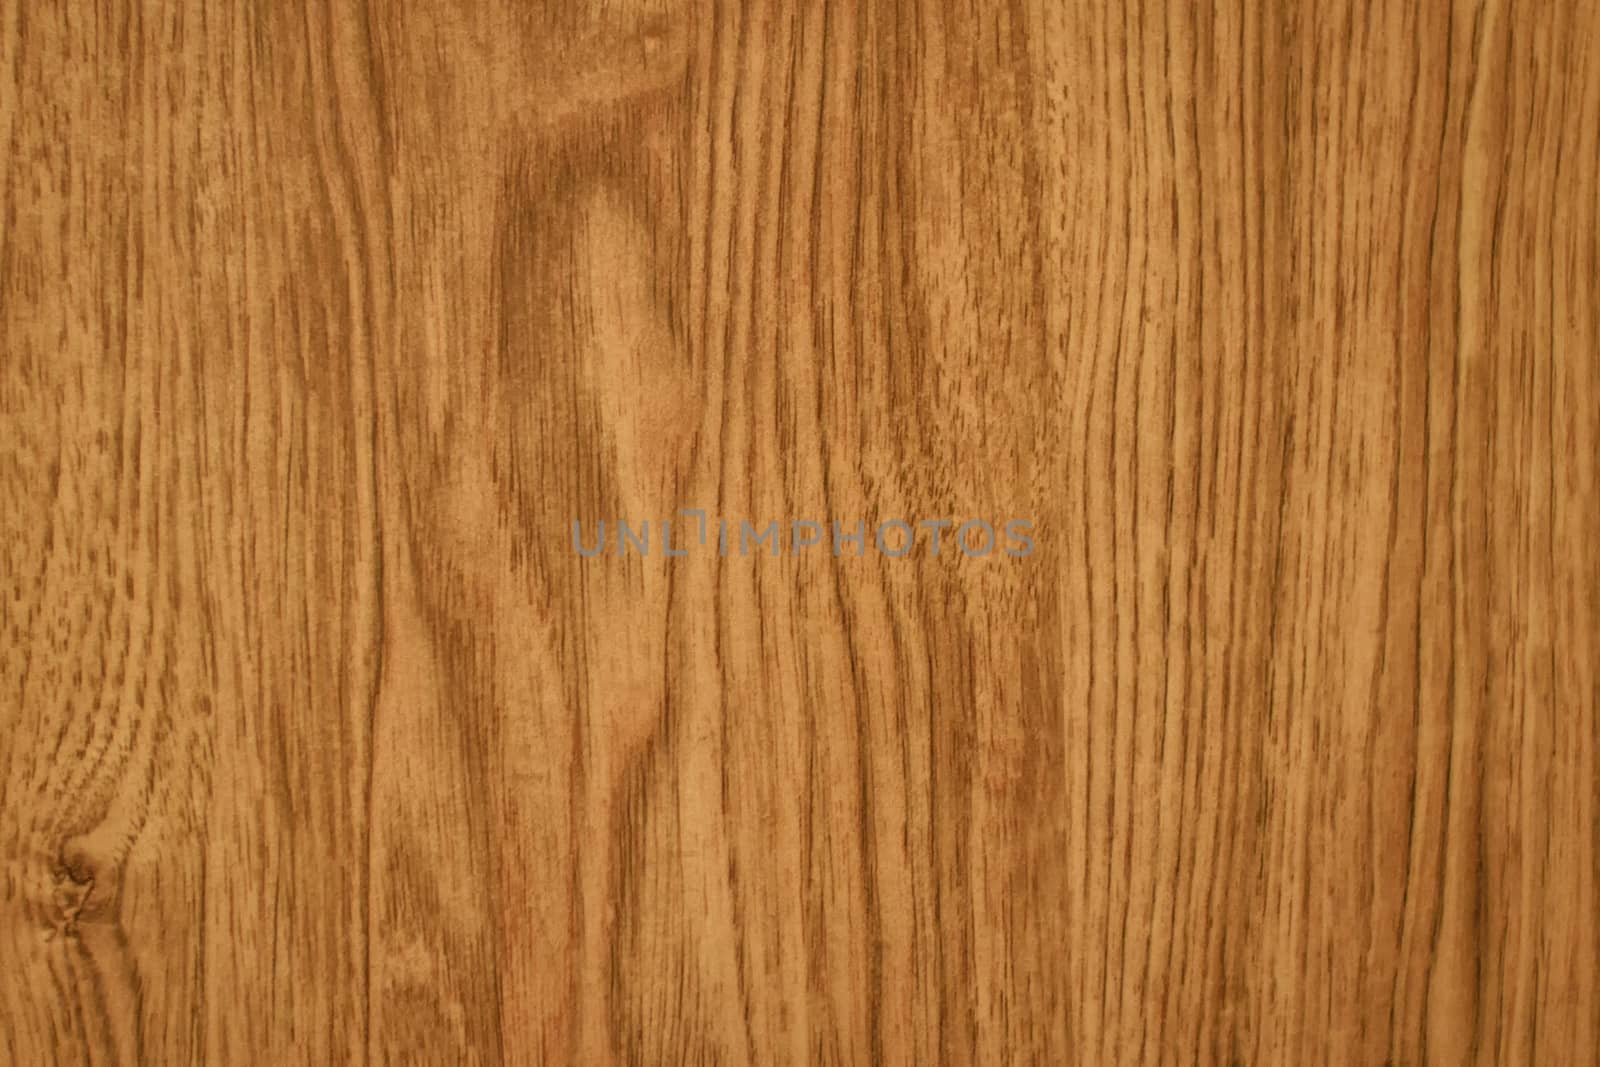 High resolution natural woodgrain texture by nopparats